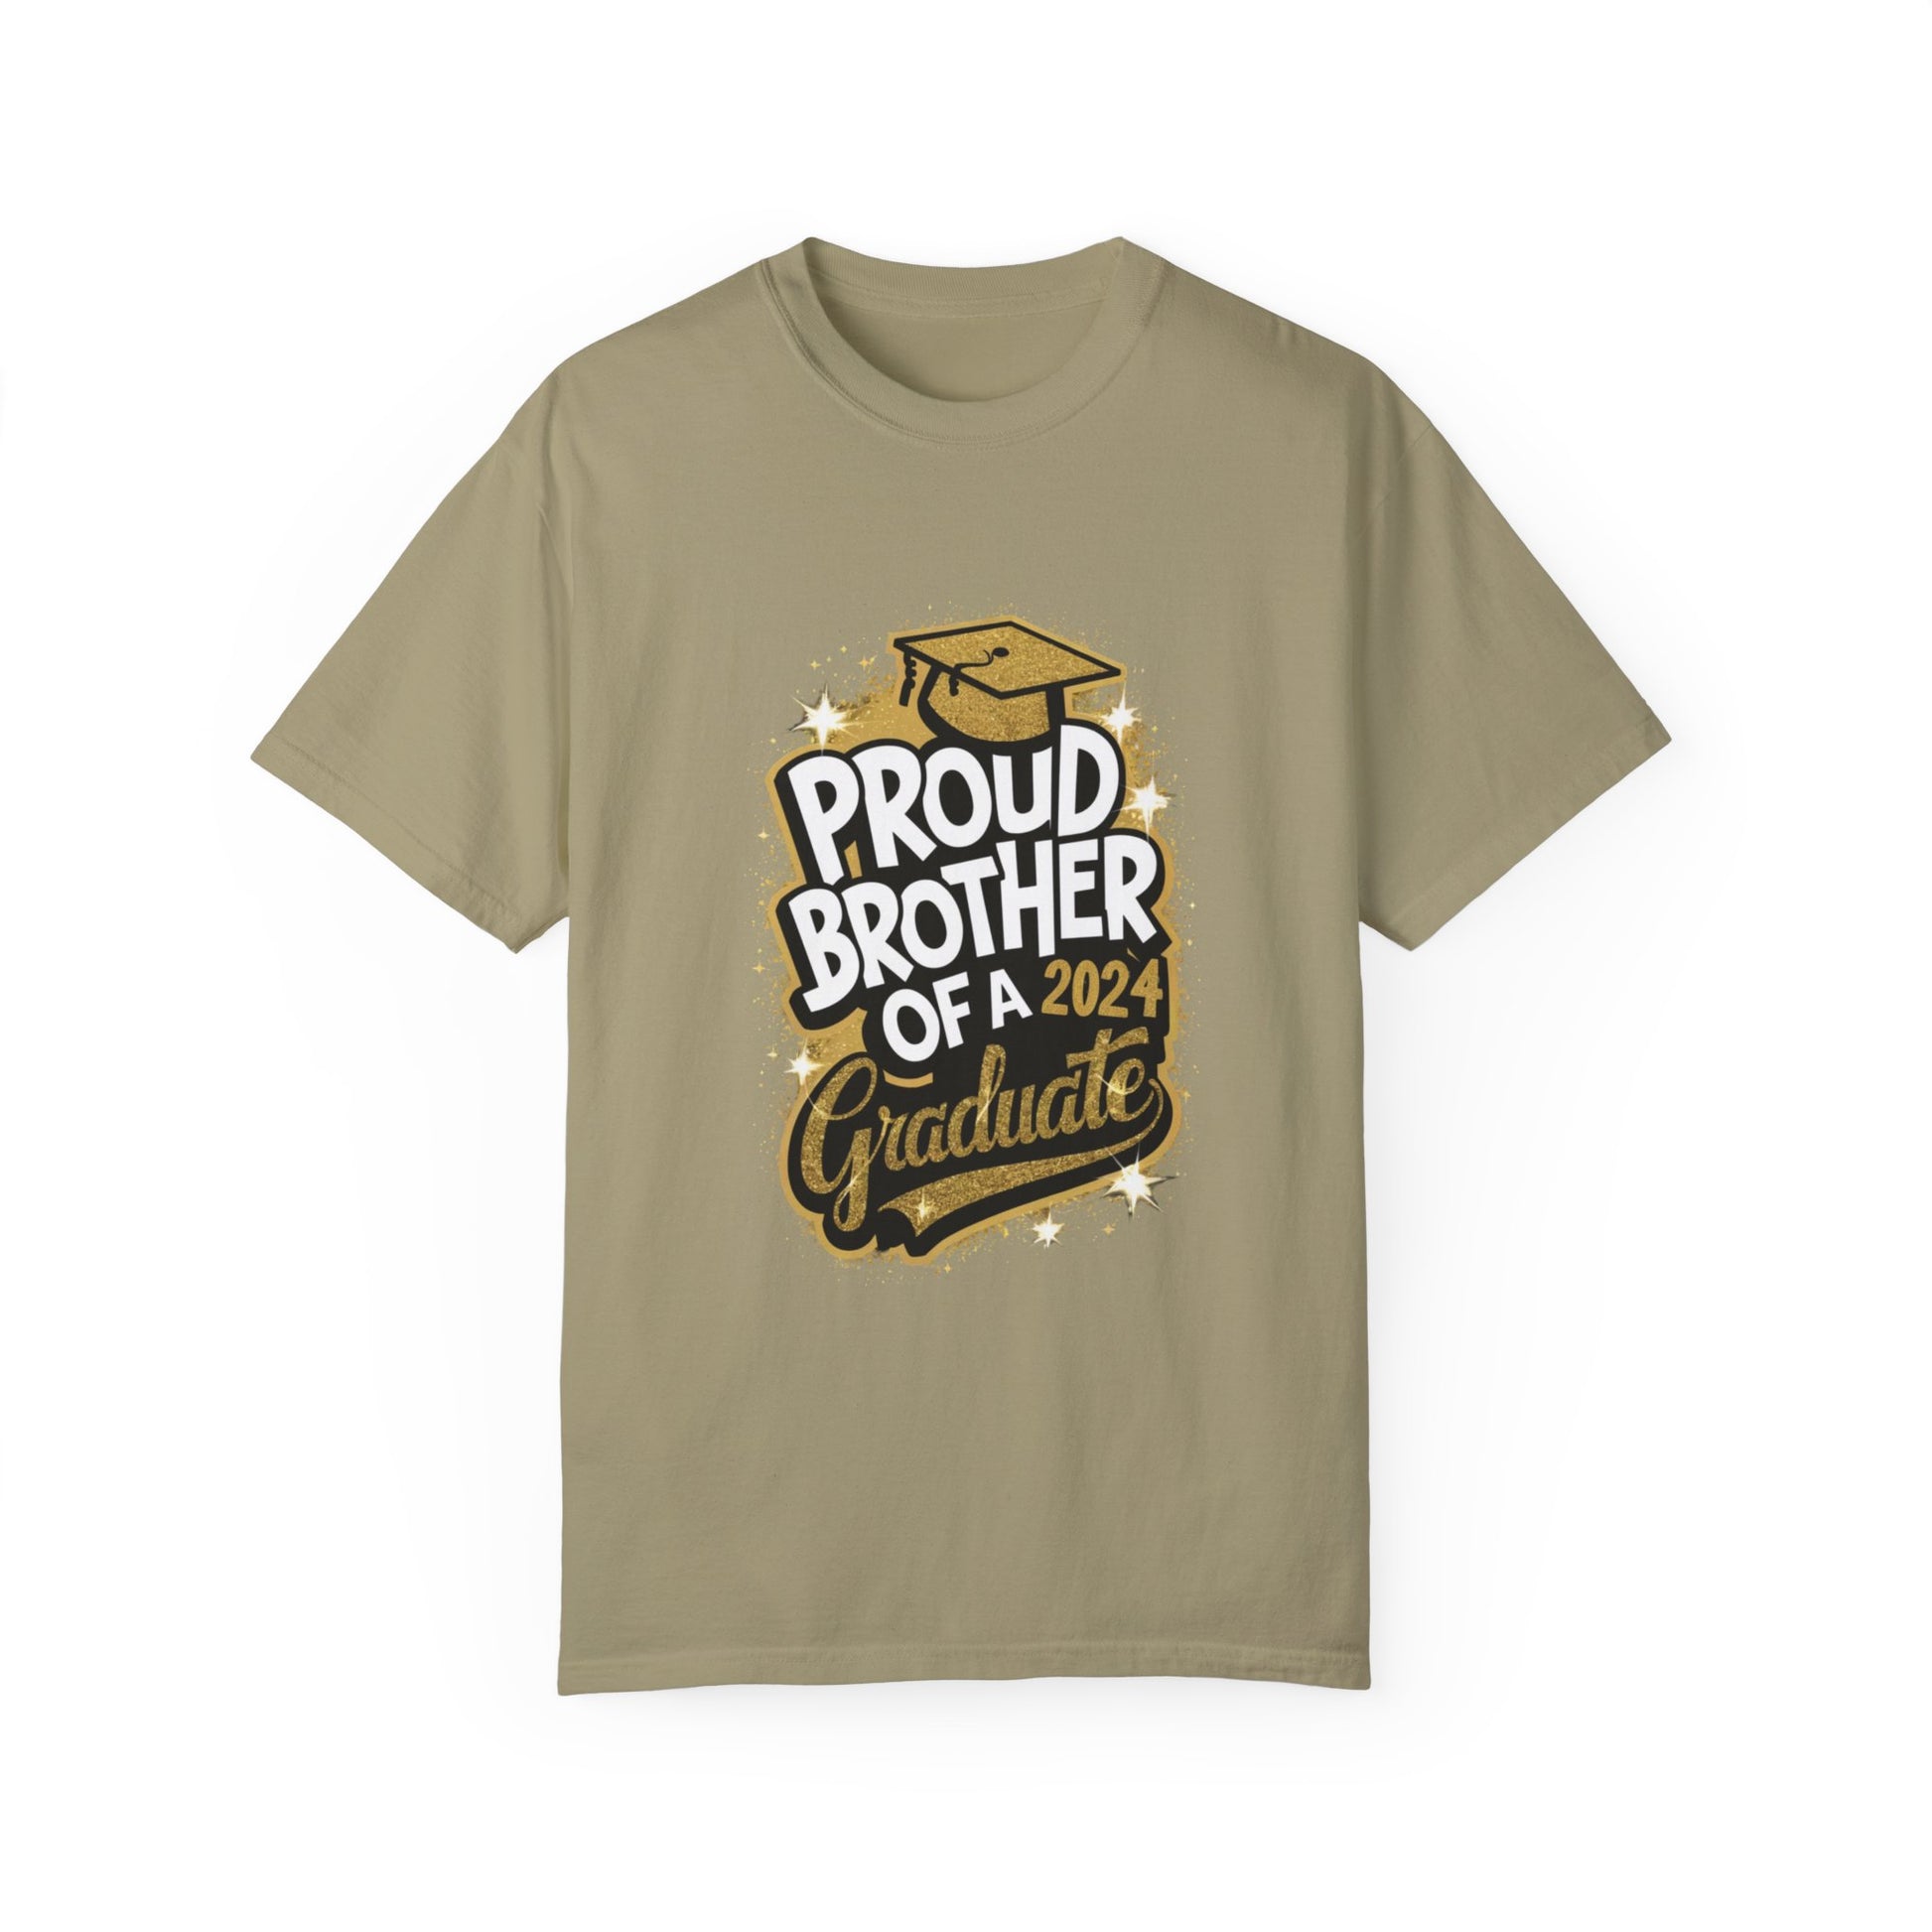 Proud Brother of a 2024 Graduate Unisex Garment-dyed T-shirt Cotton Funny Humorous Graphic Soft Premium Unisex Men Women Khaki T-shirt Birthday Gift-11